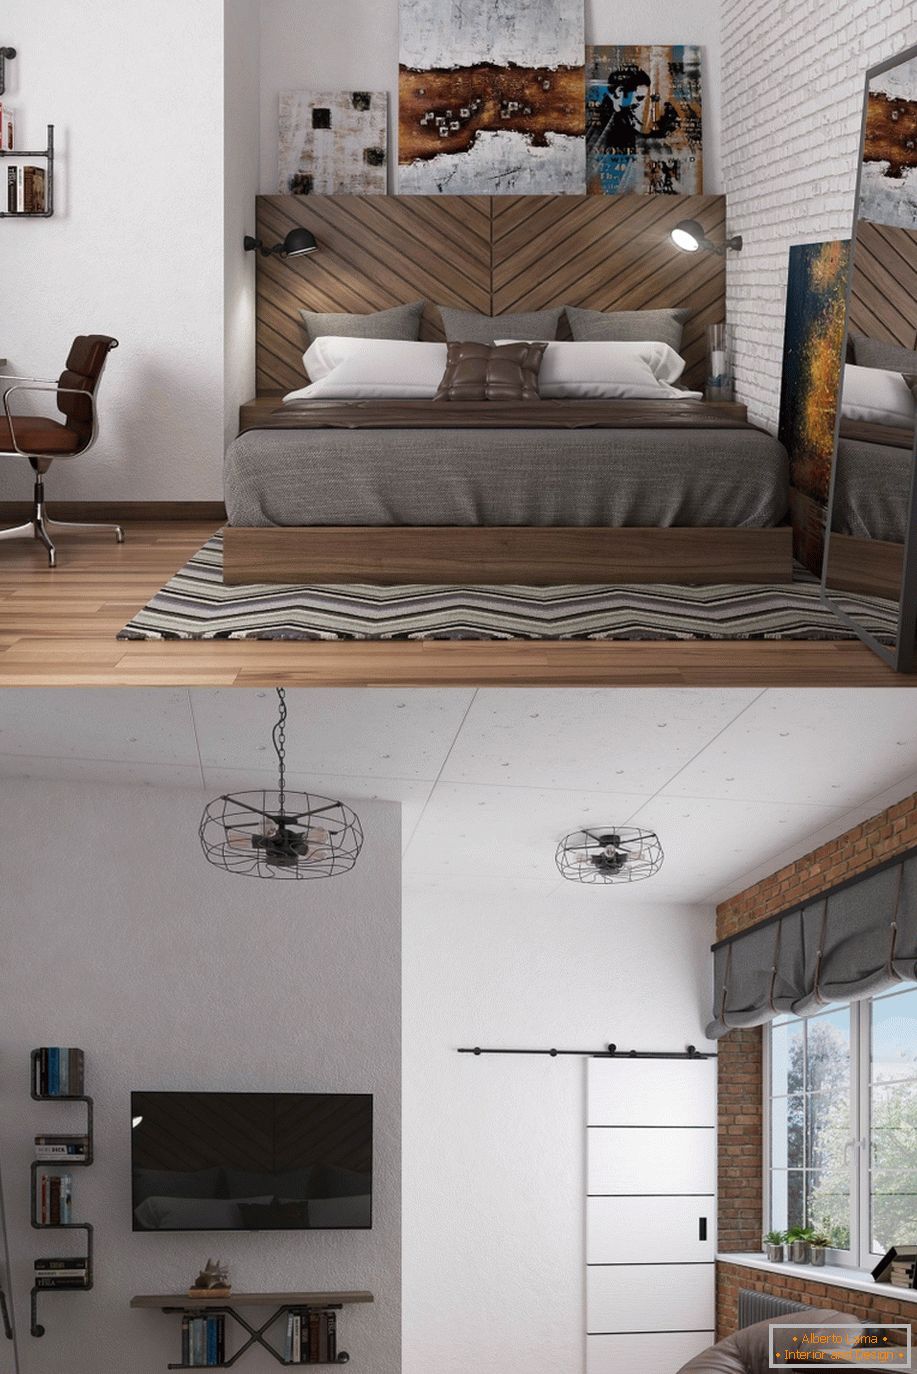 Design de interiores de estilo loft